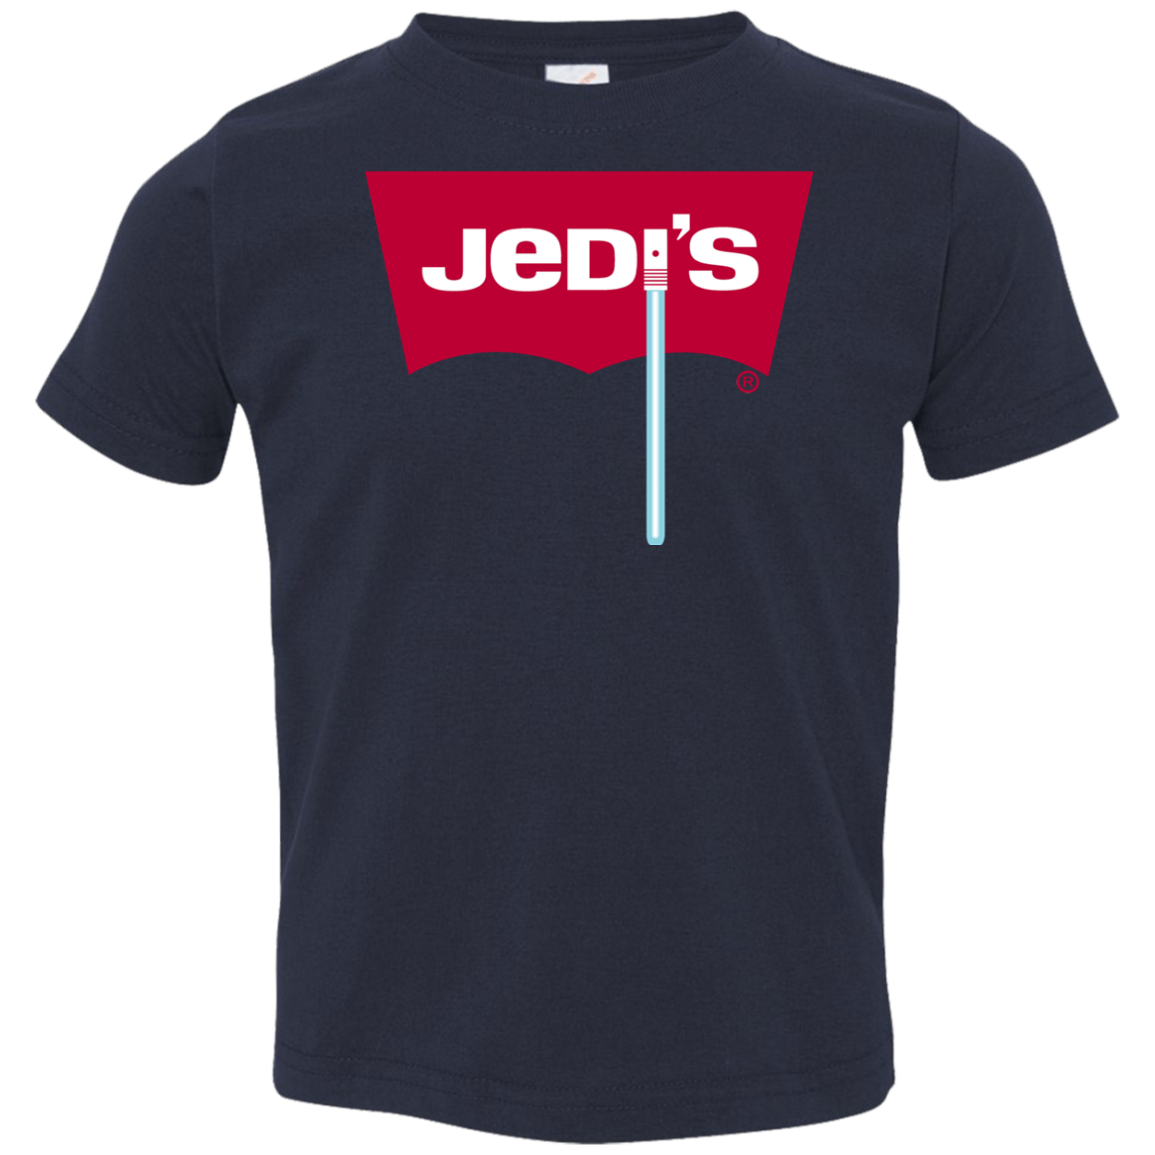 Jedi's Toddler Premium T-Shirt